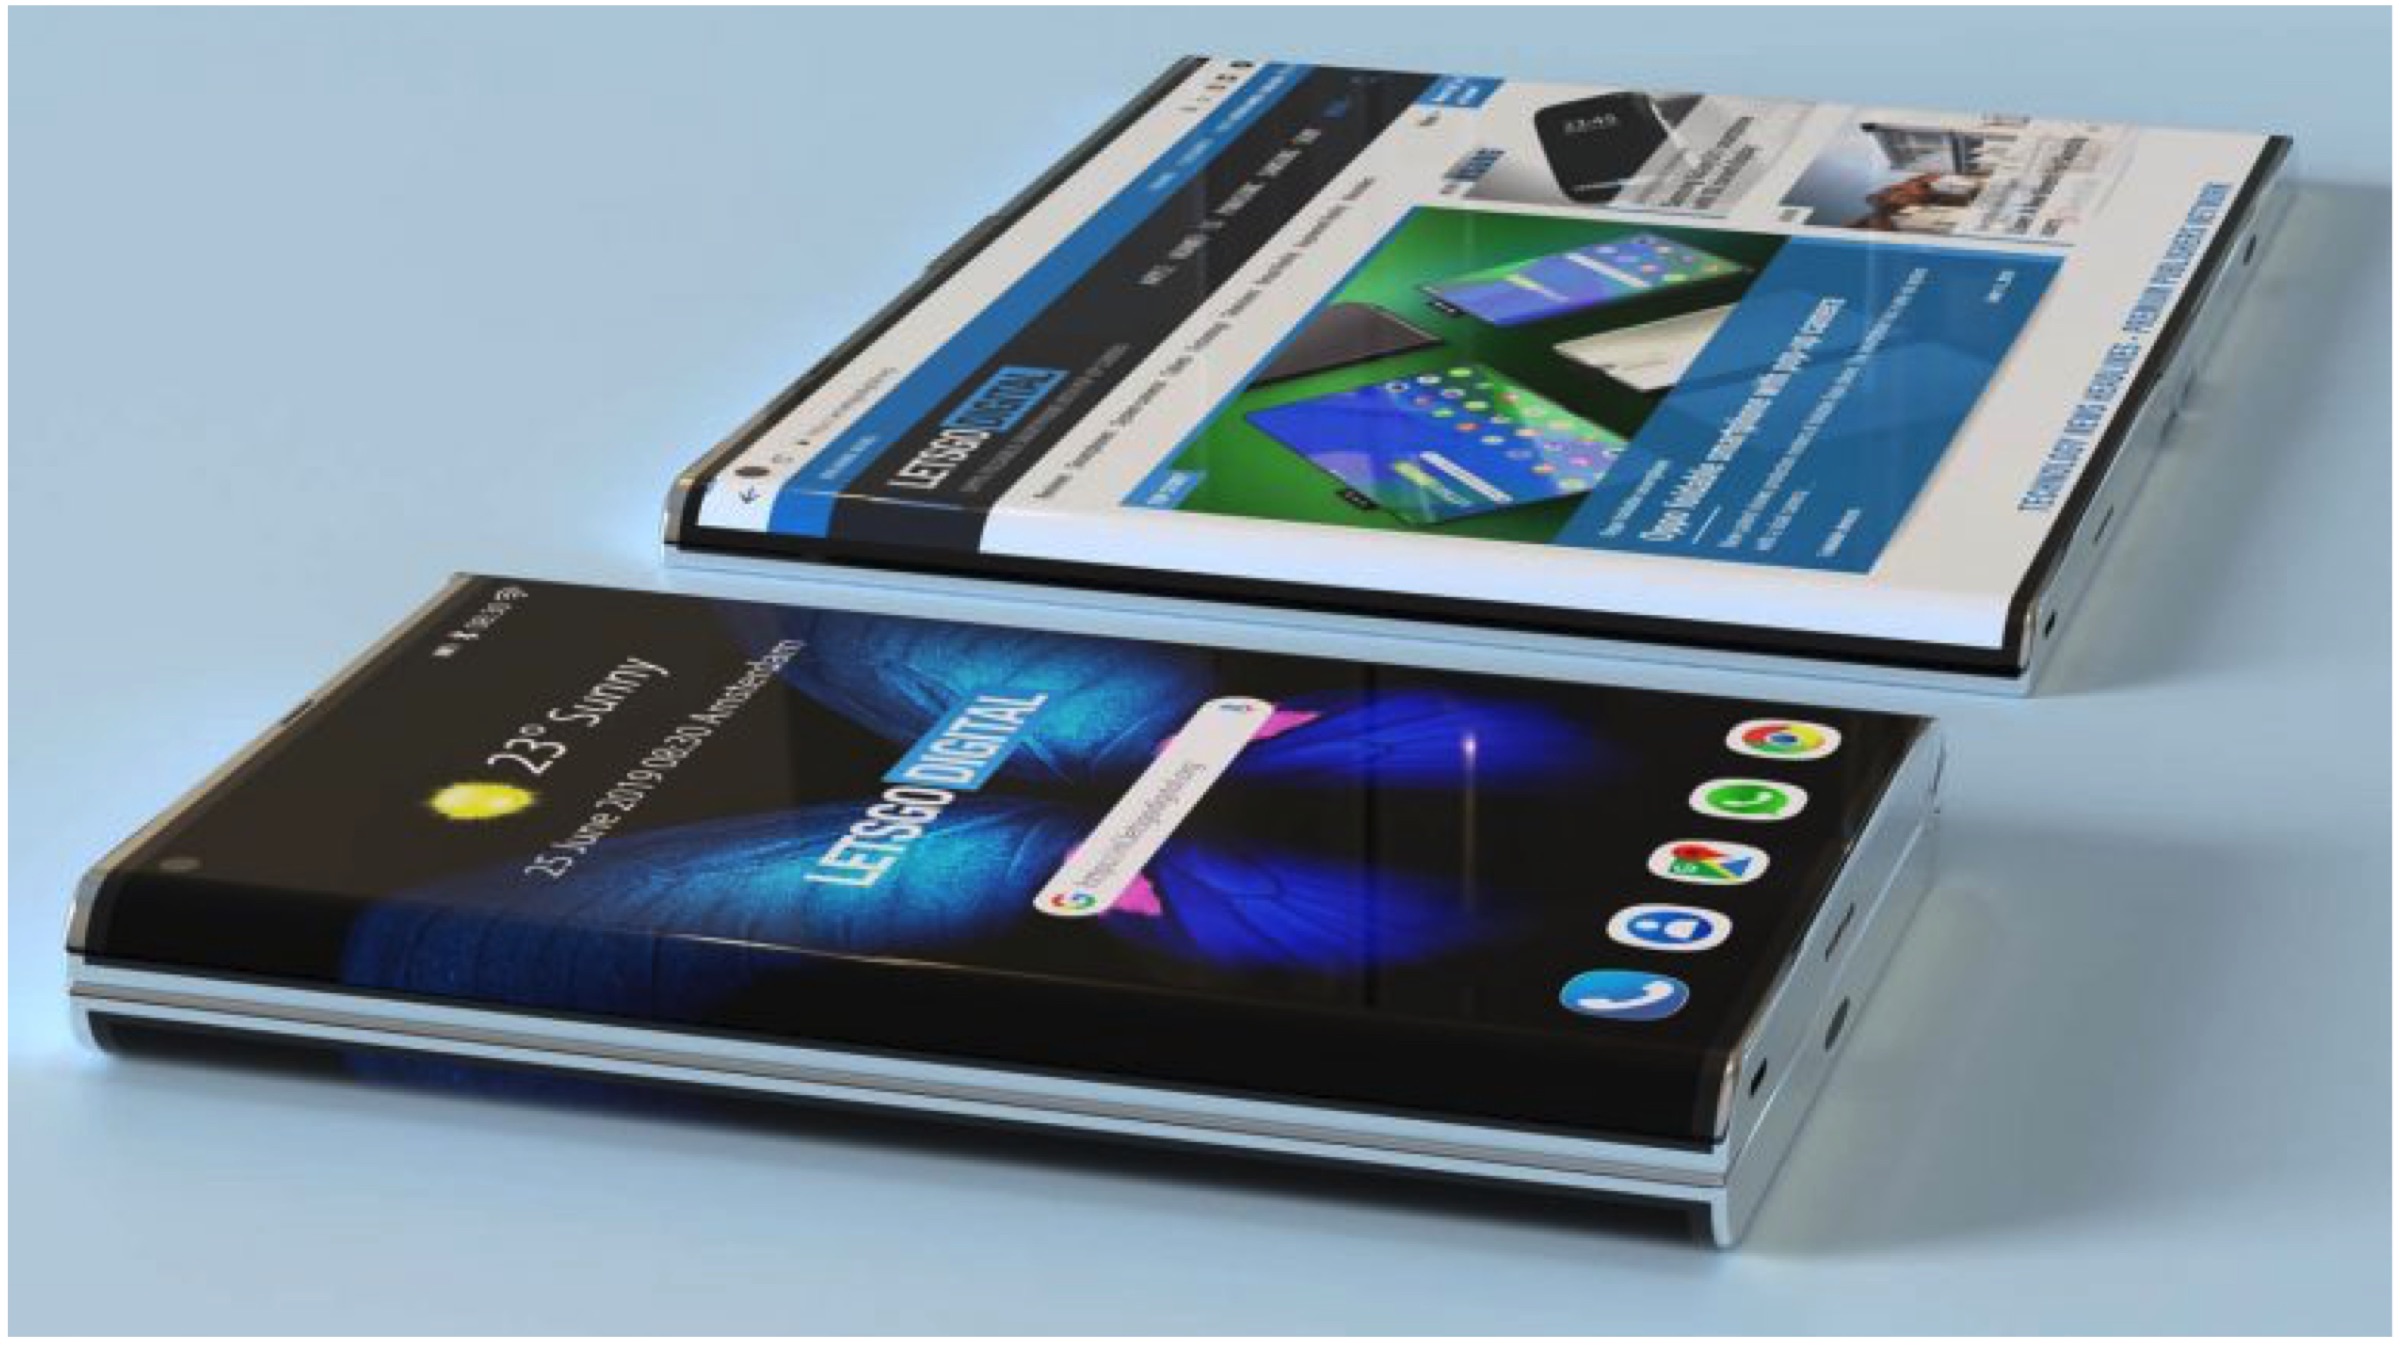 Foldable smartphone